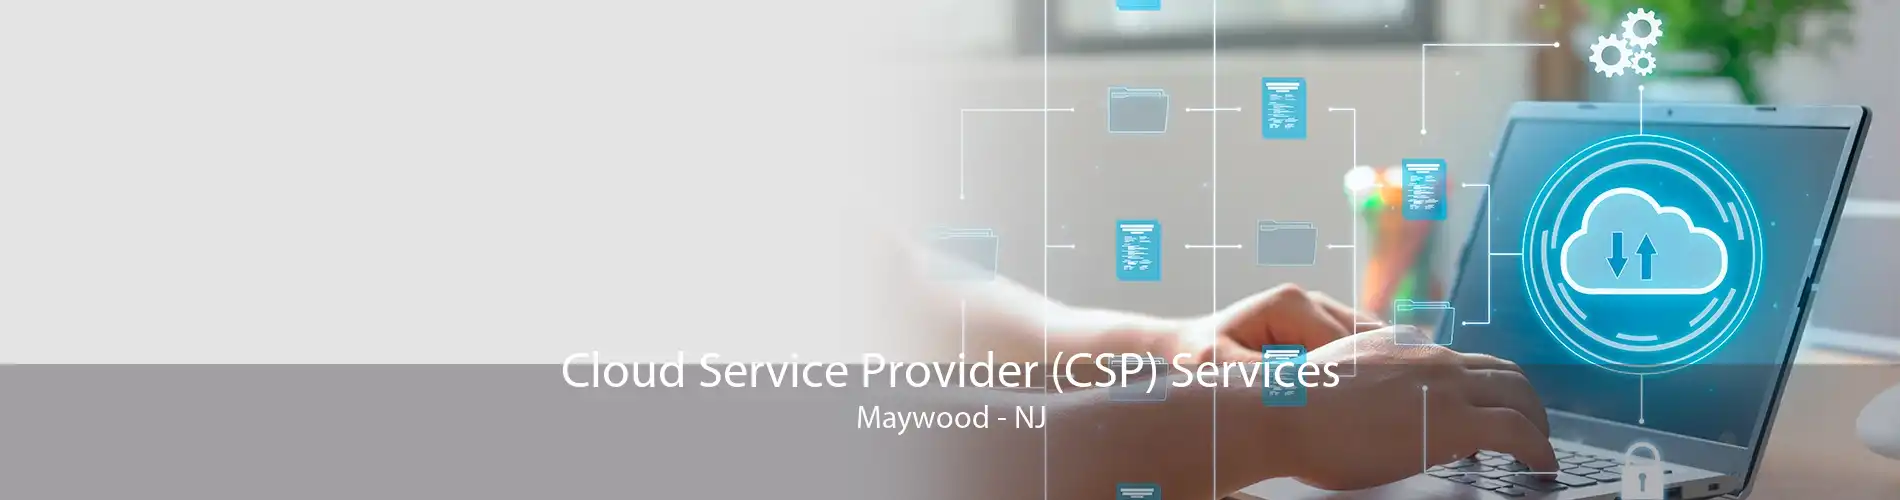 Cloud Service Provider (CSP) Services Maywood - NJ